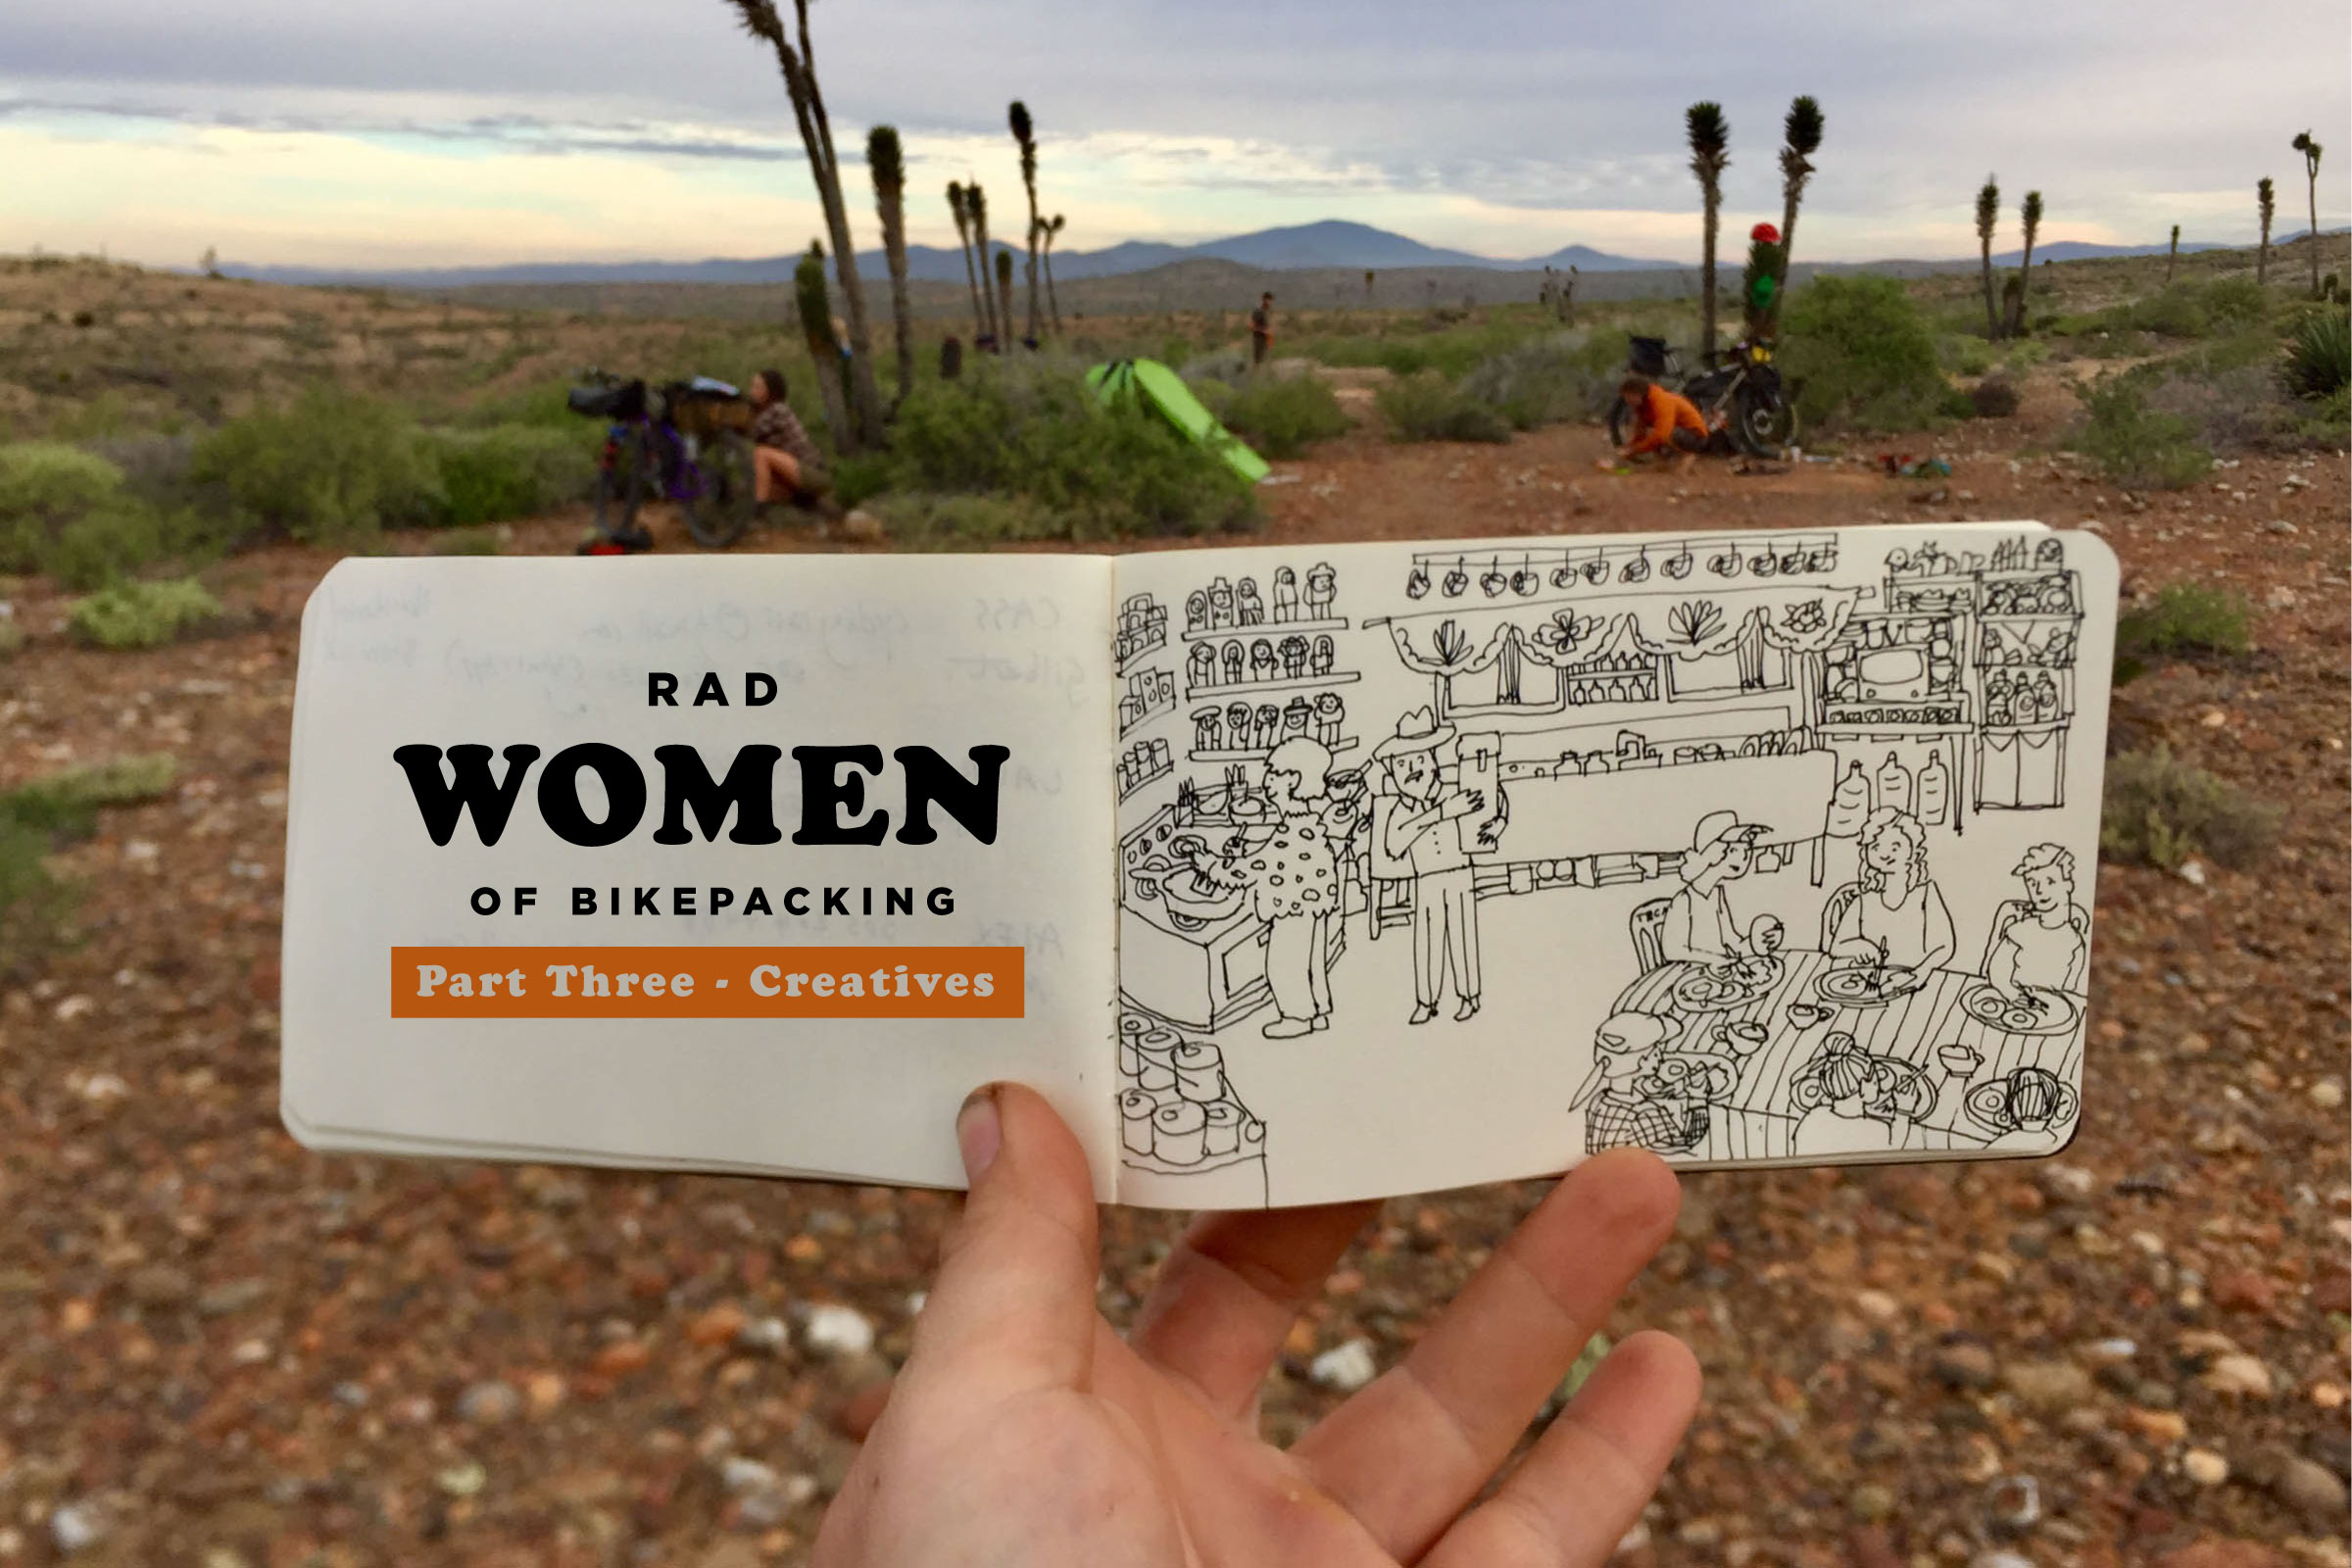 Rad Women of Bikepacking Part 3 - Creatives